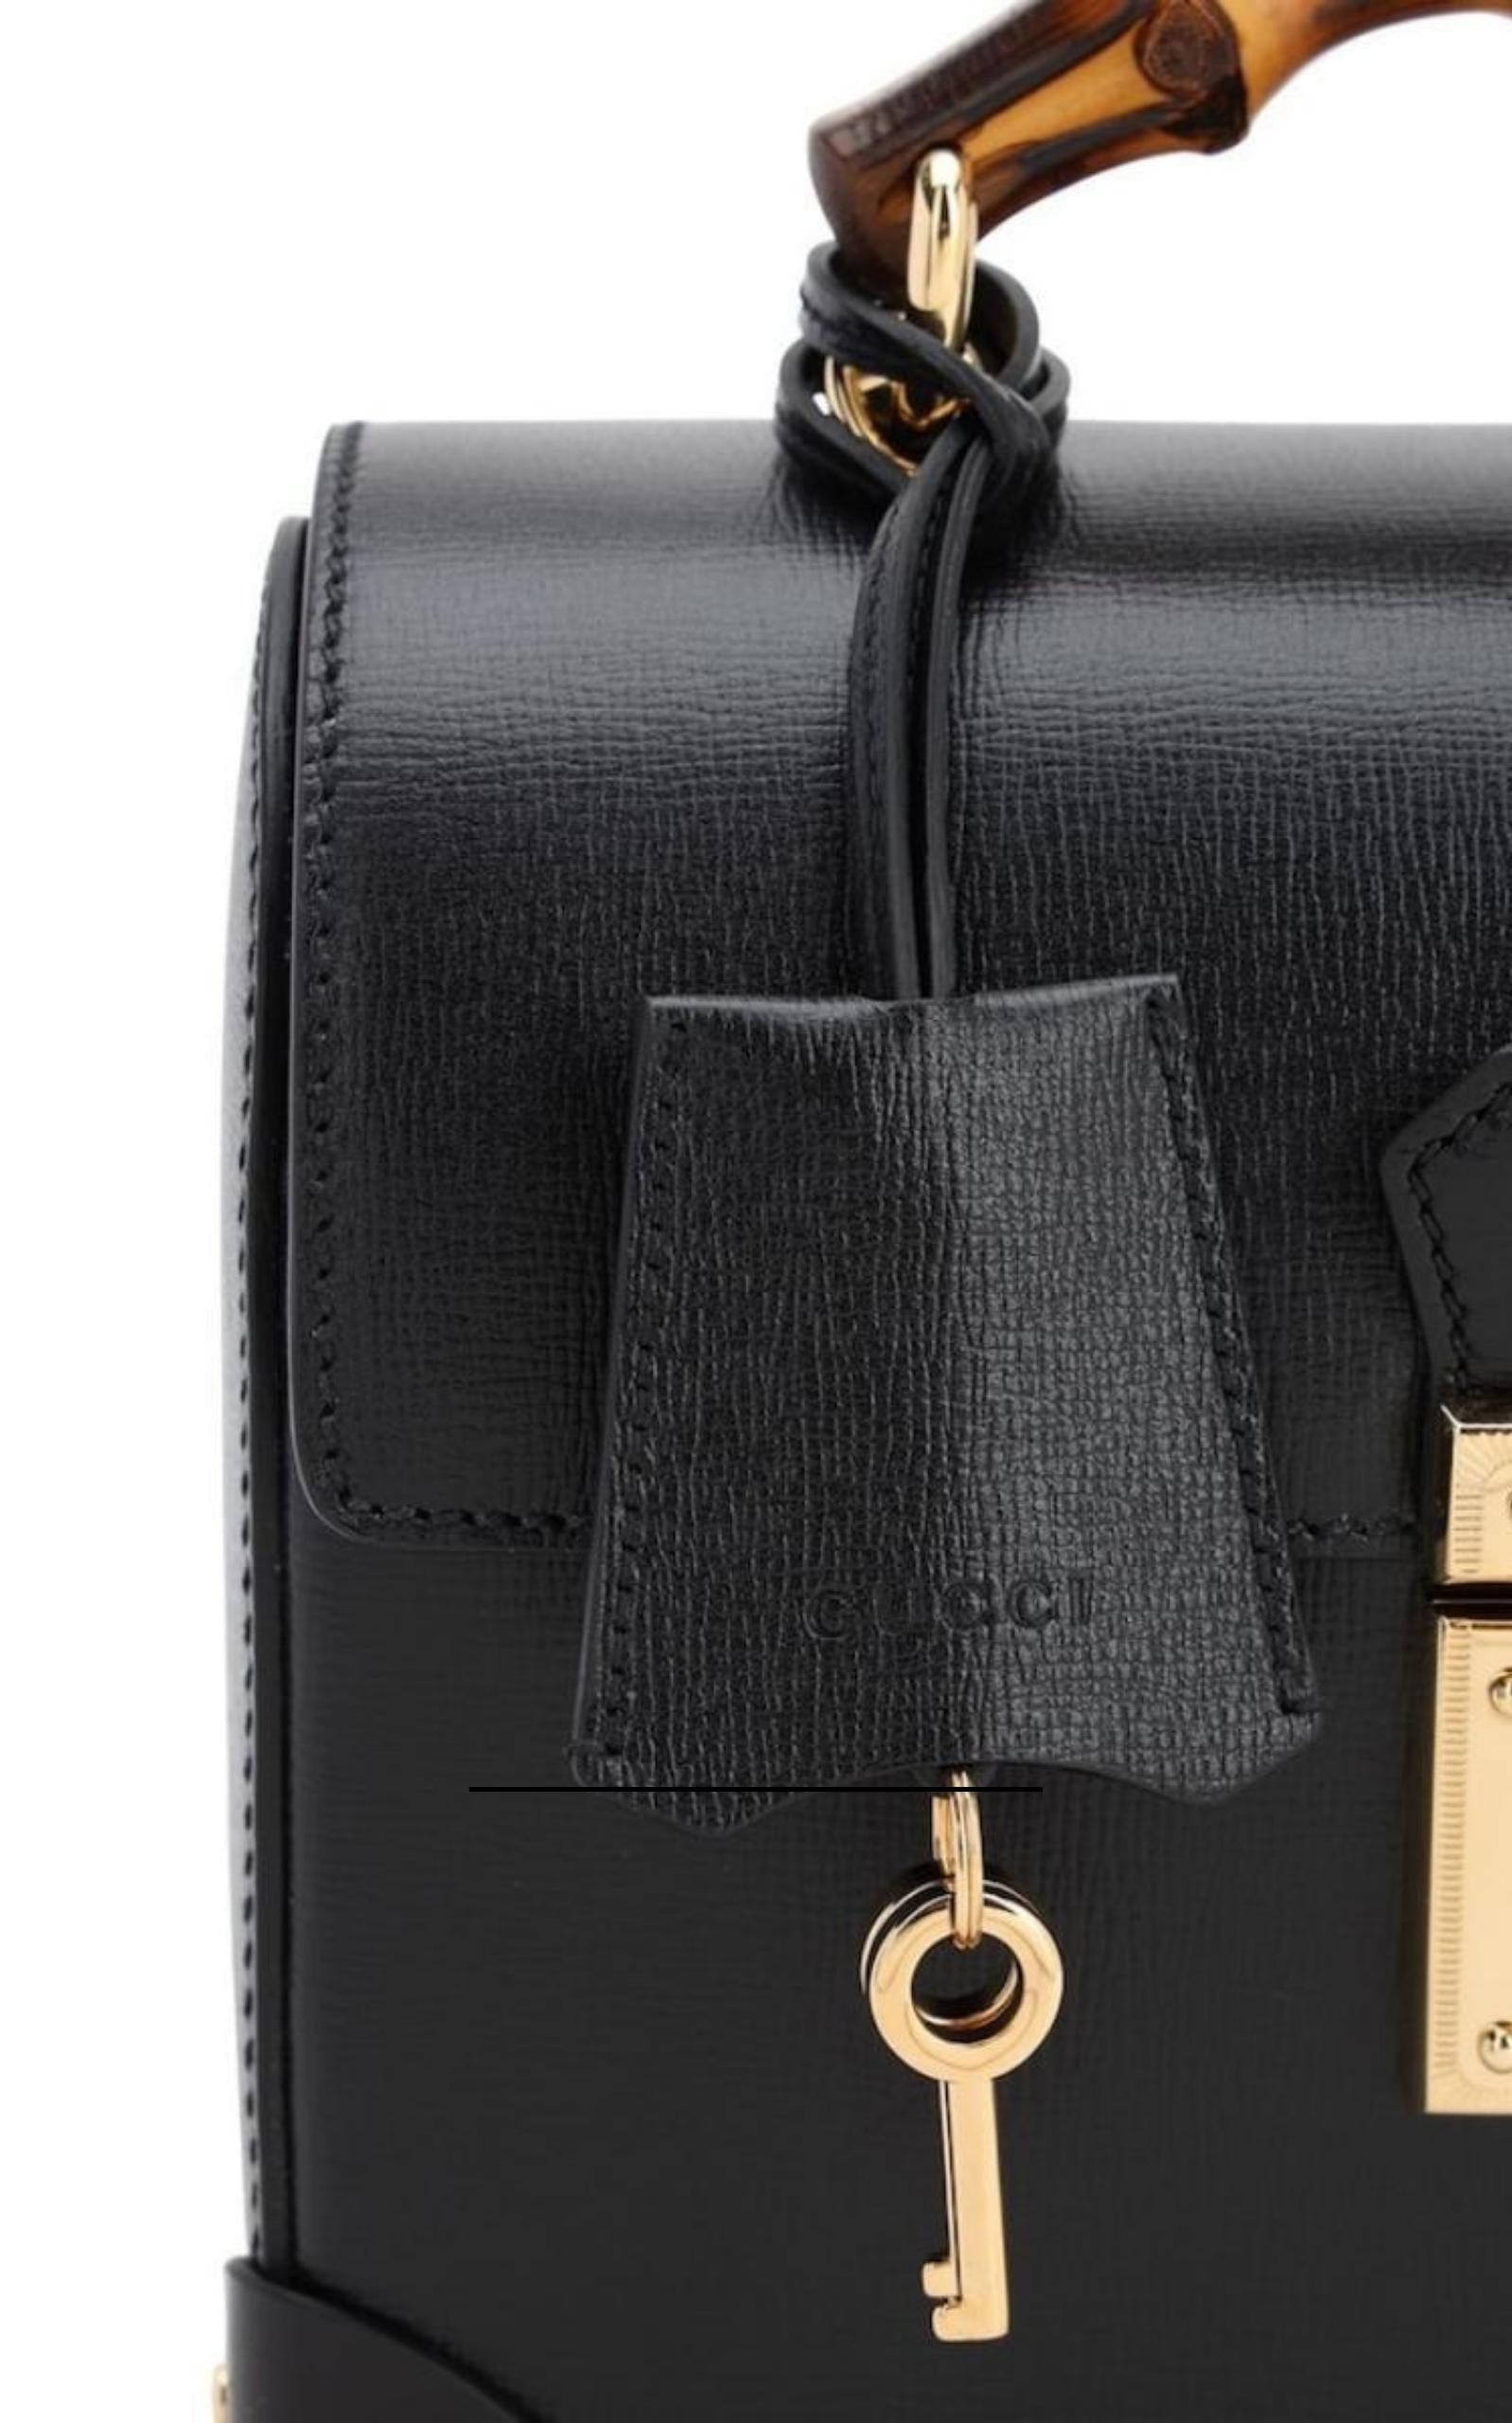 Gucci Padlock Small Leather Shoulder Bag in Black